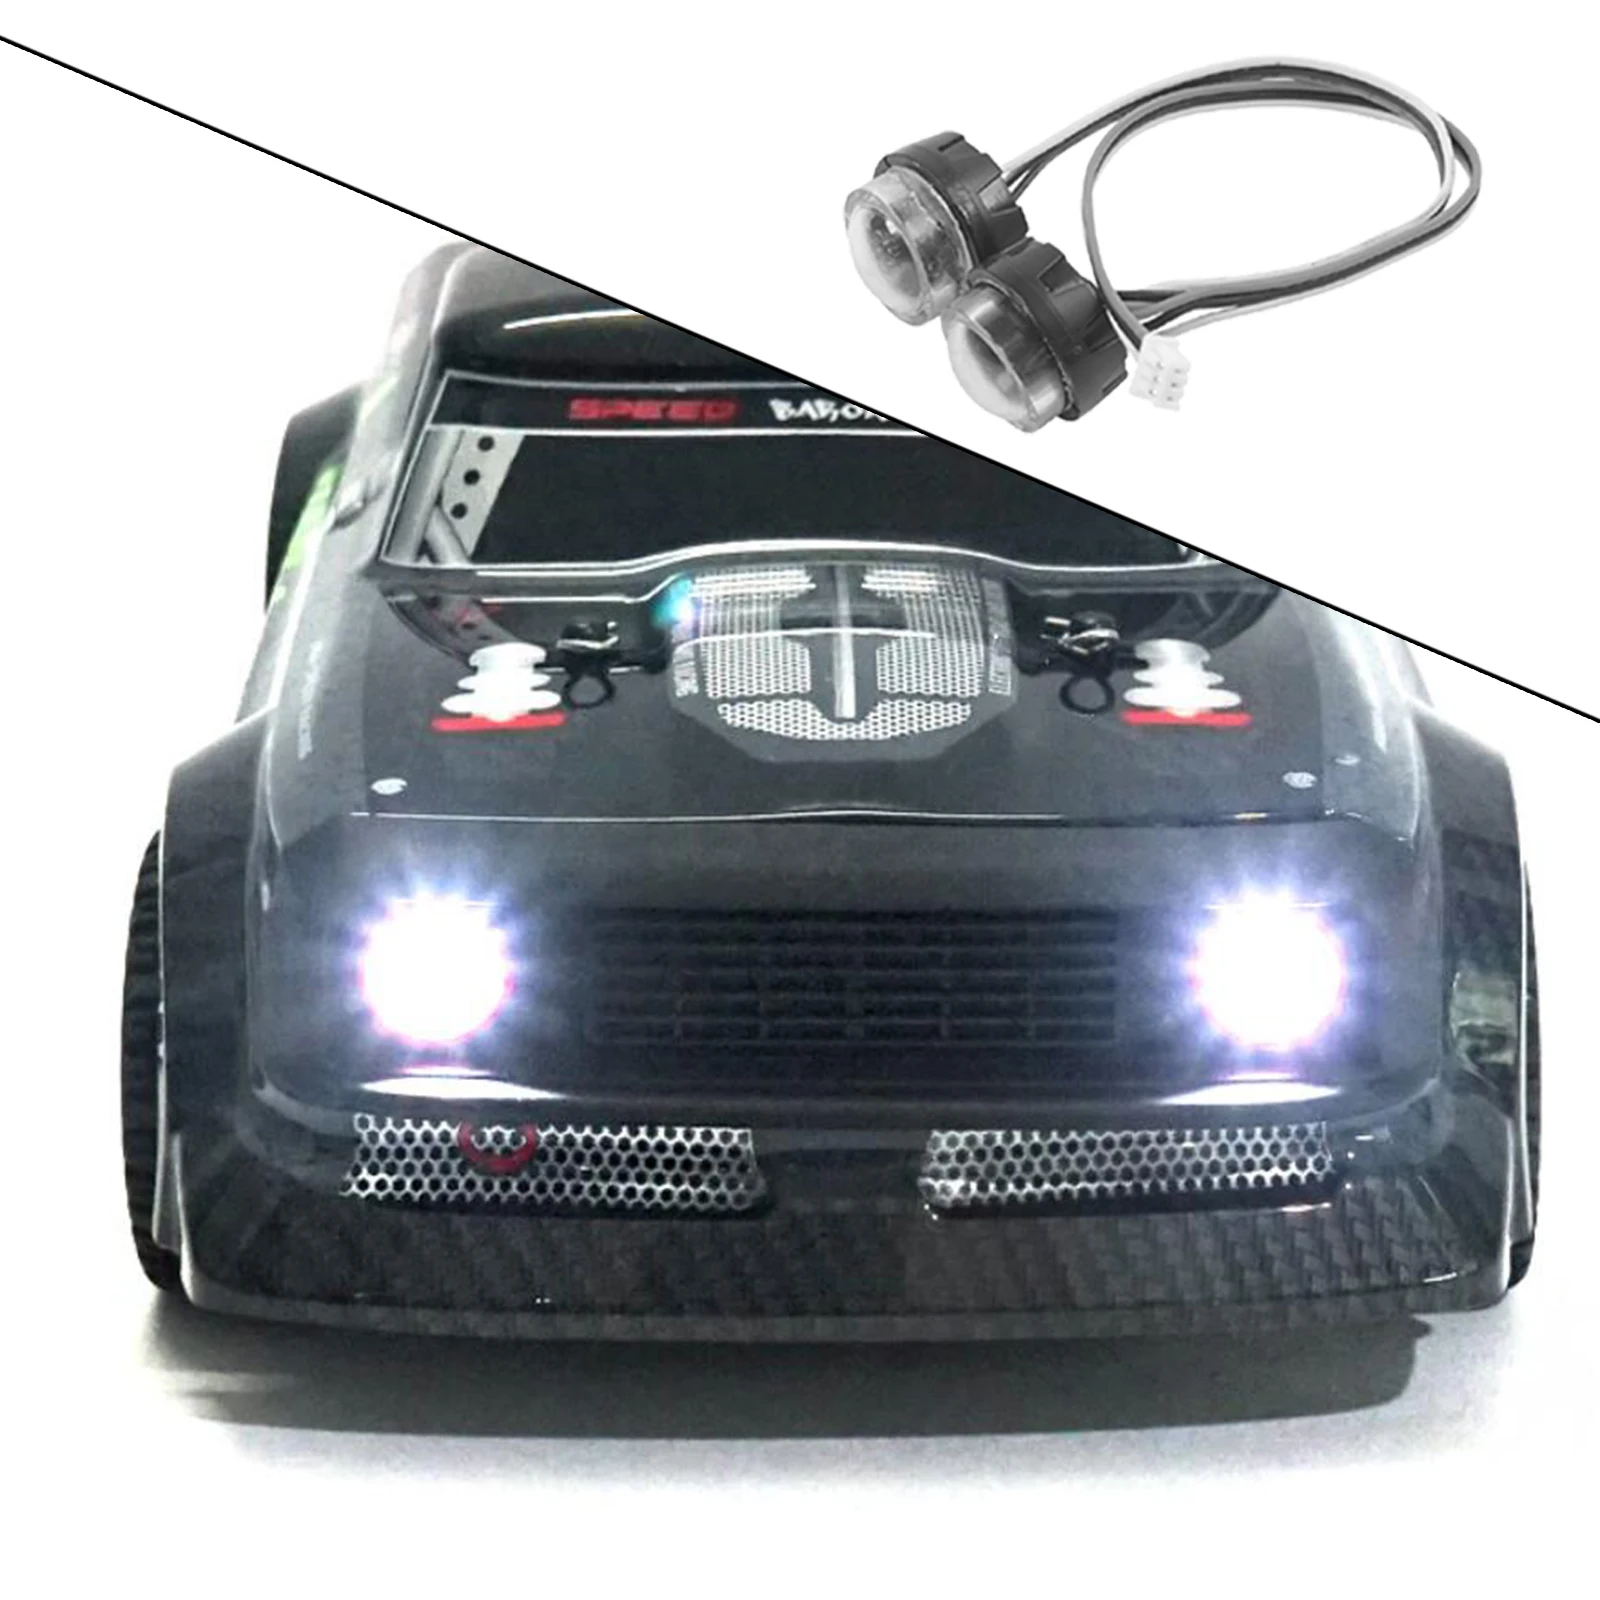 Front LED Light Headlight Spotlight Replacement for SG-1603 1:16  Car